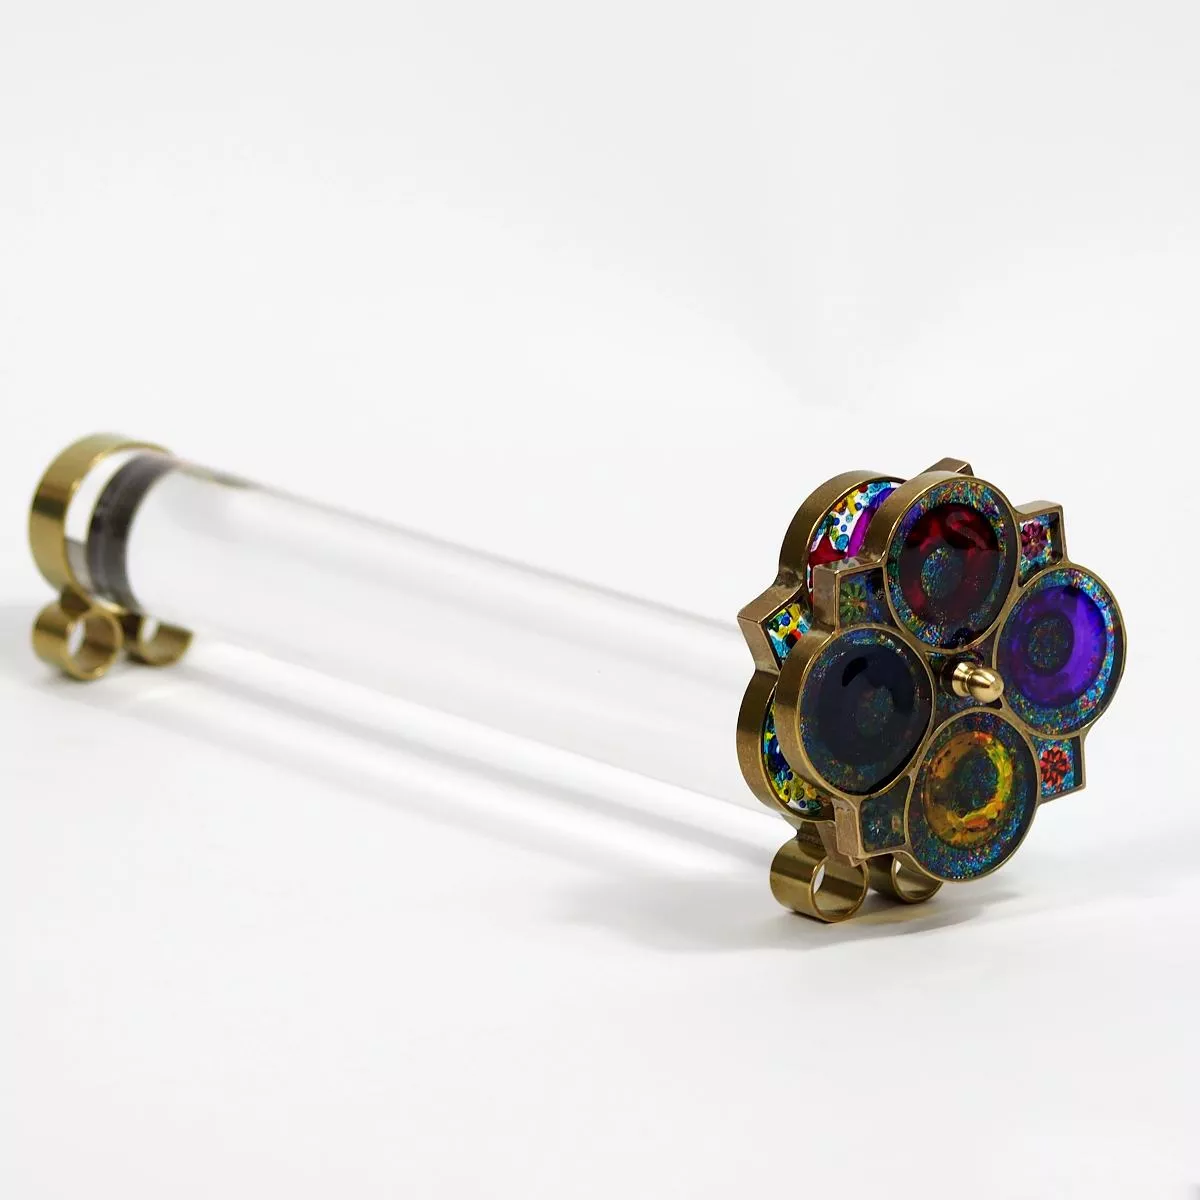 Vortex – Handmade Brass Kaleidoscope with Transparent Tube